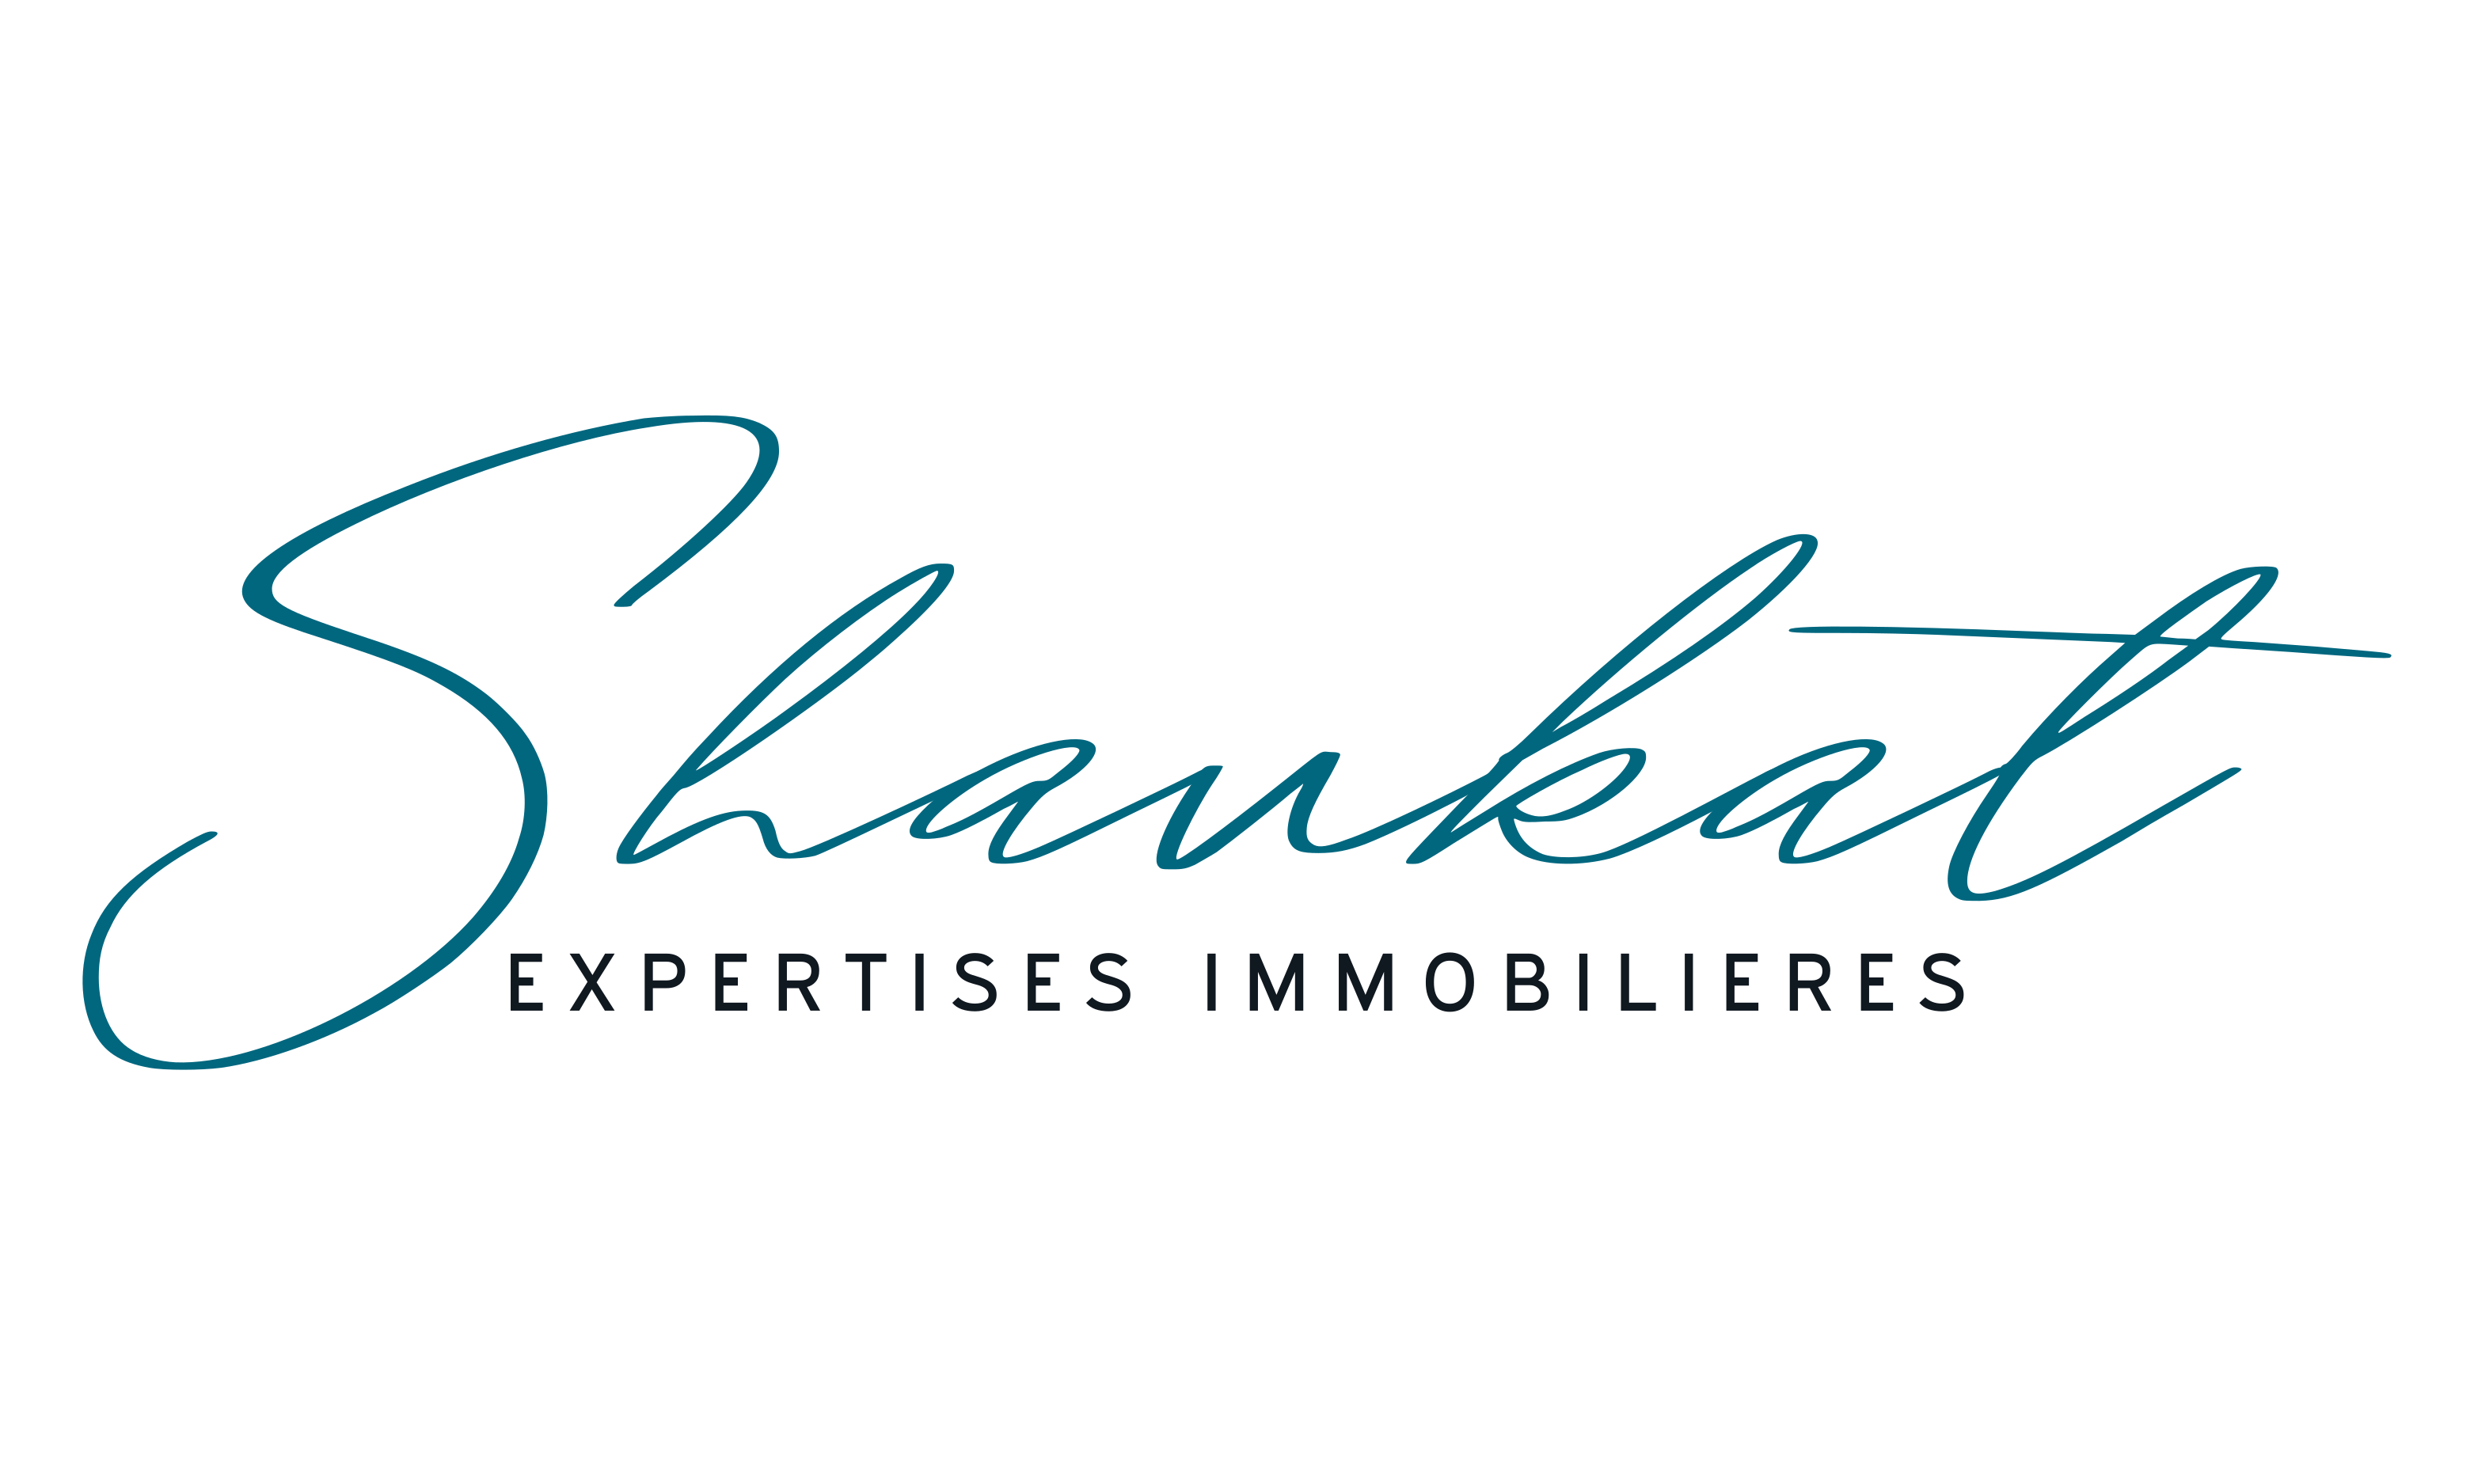 Shaukat Expertises Immobilières 